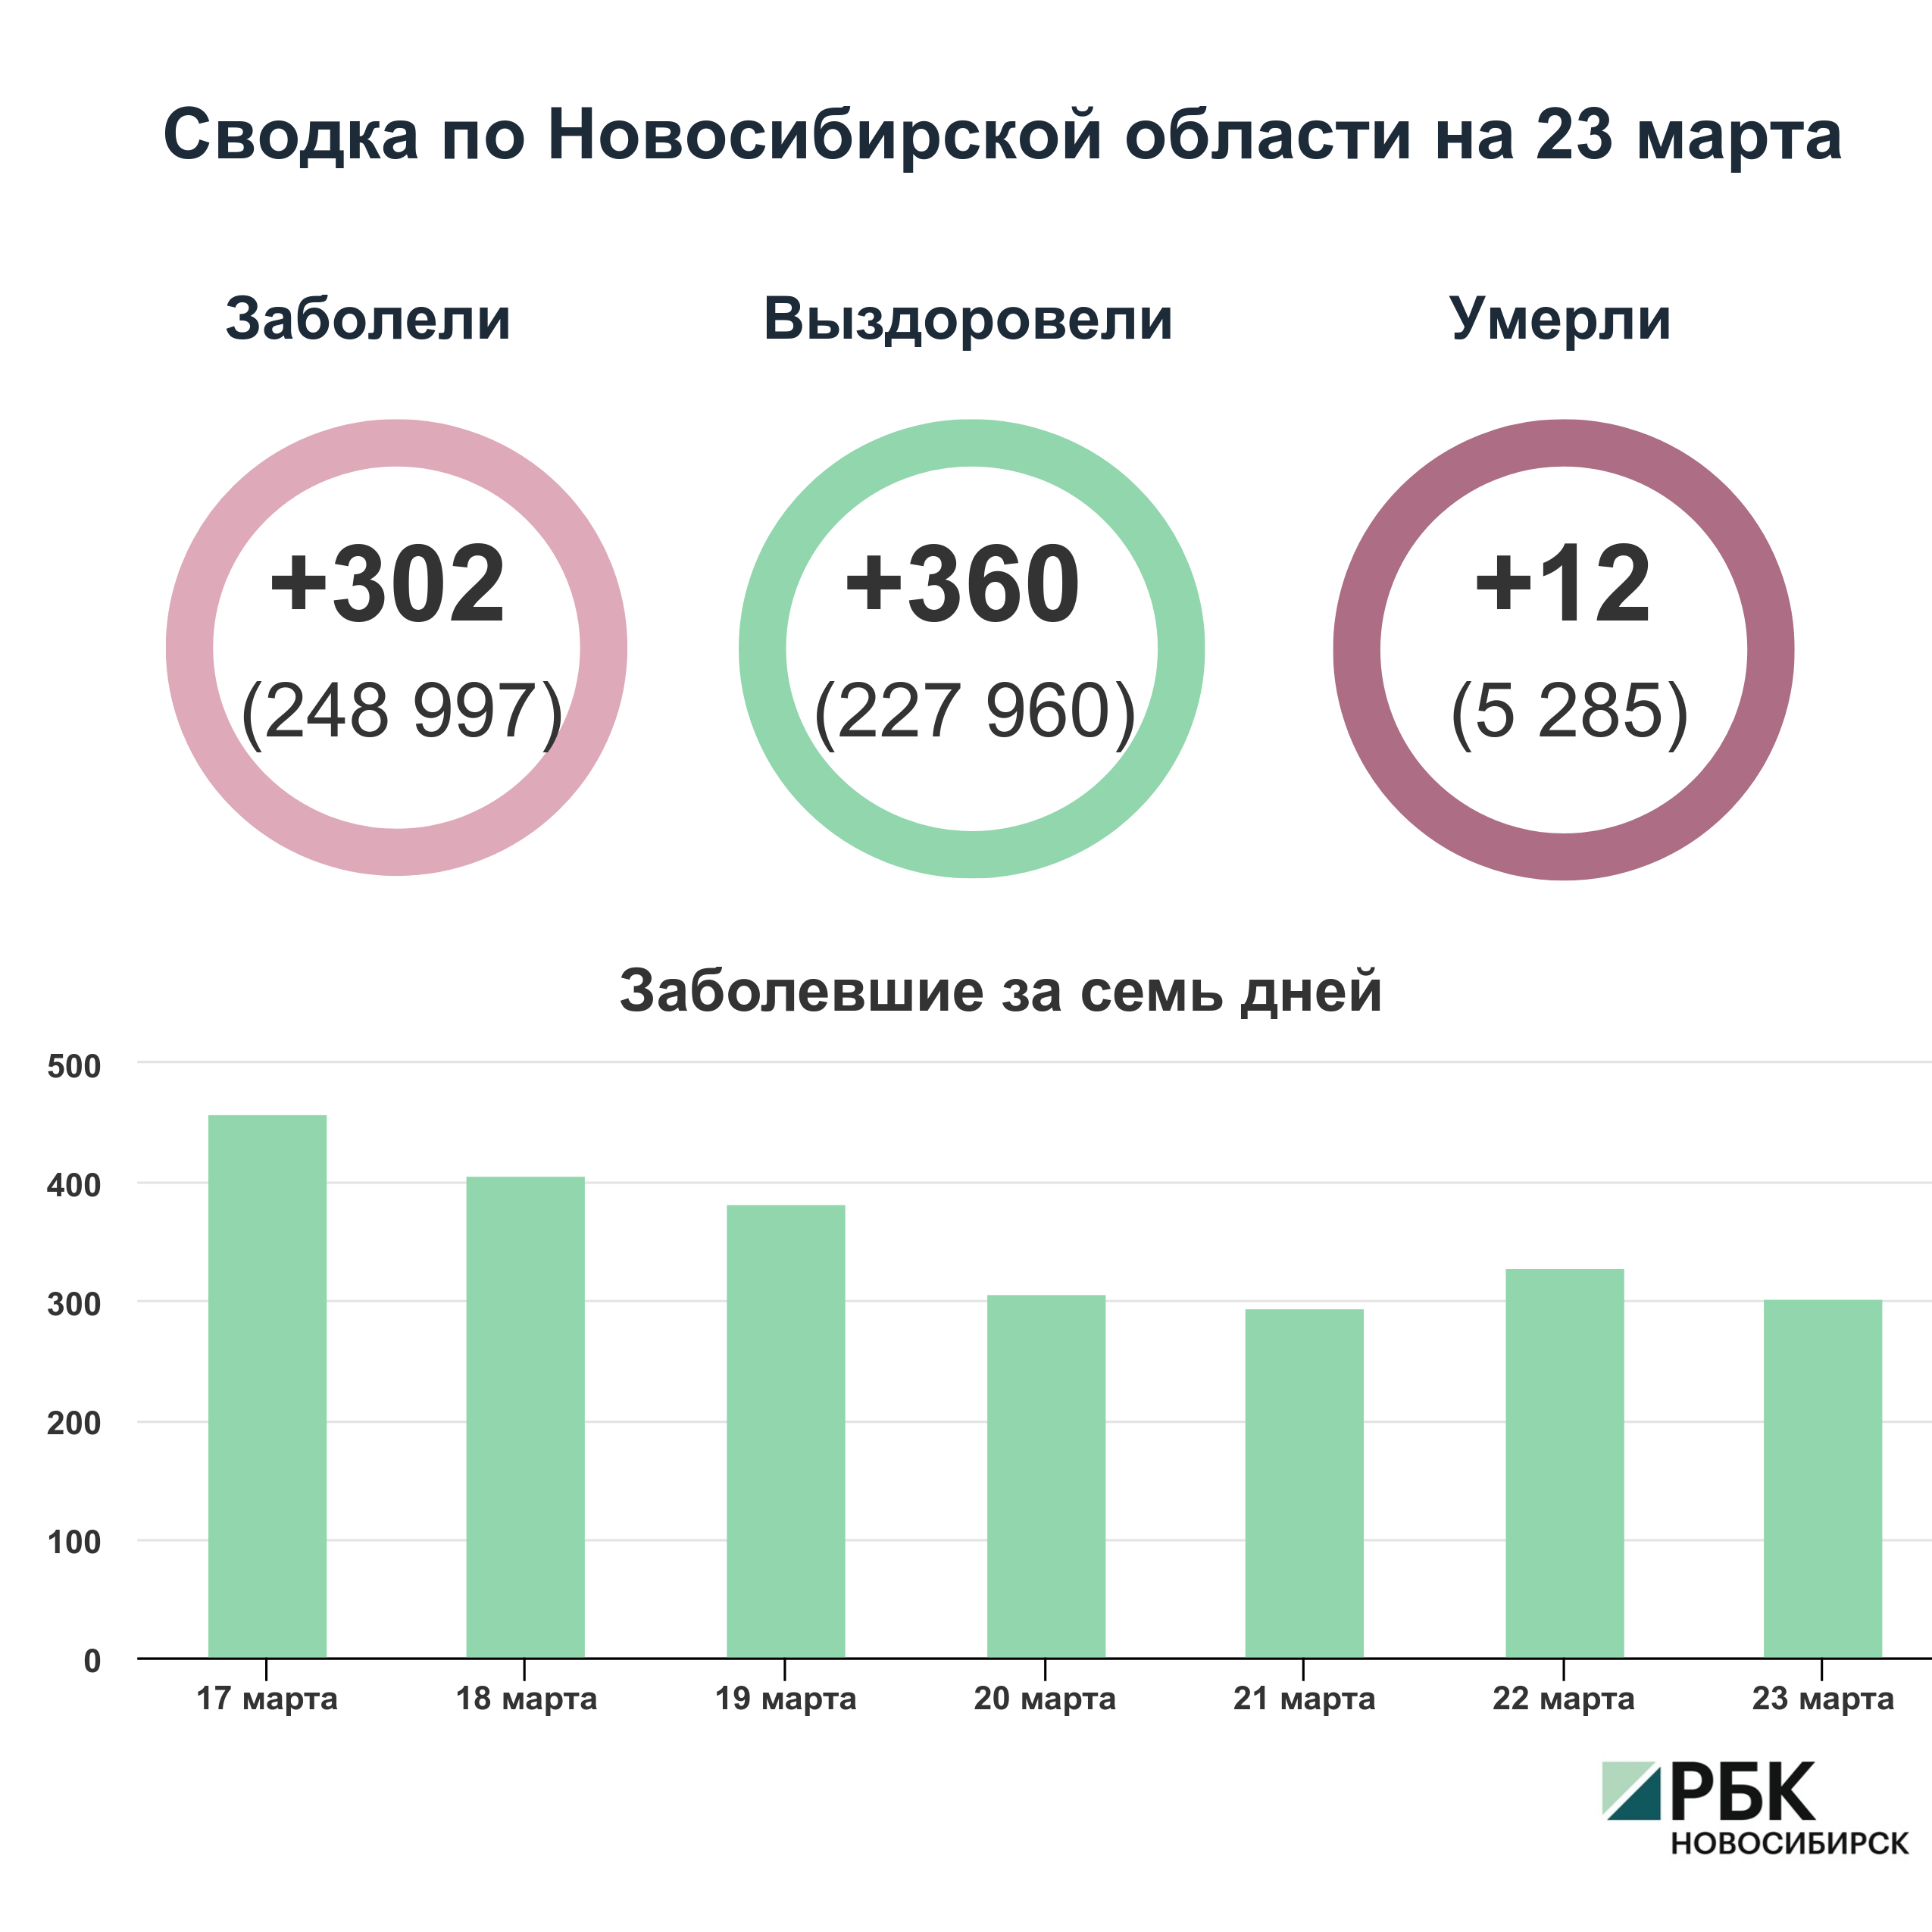 Коронавирус в Новосибирске: сводка на 23 марта